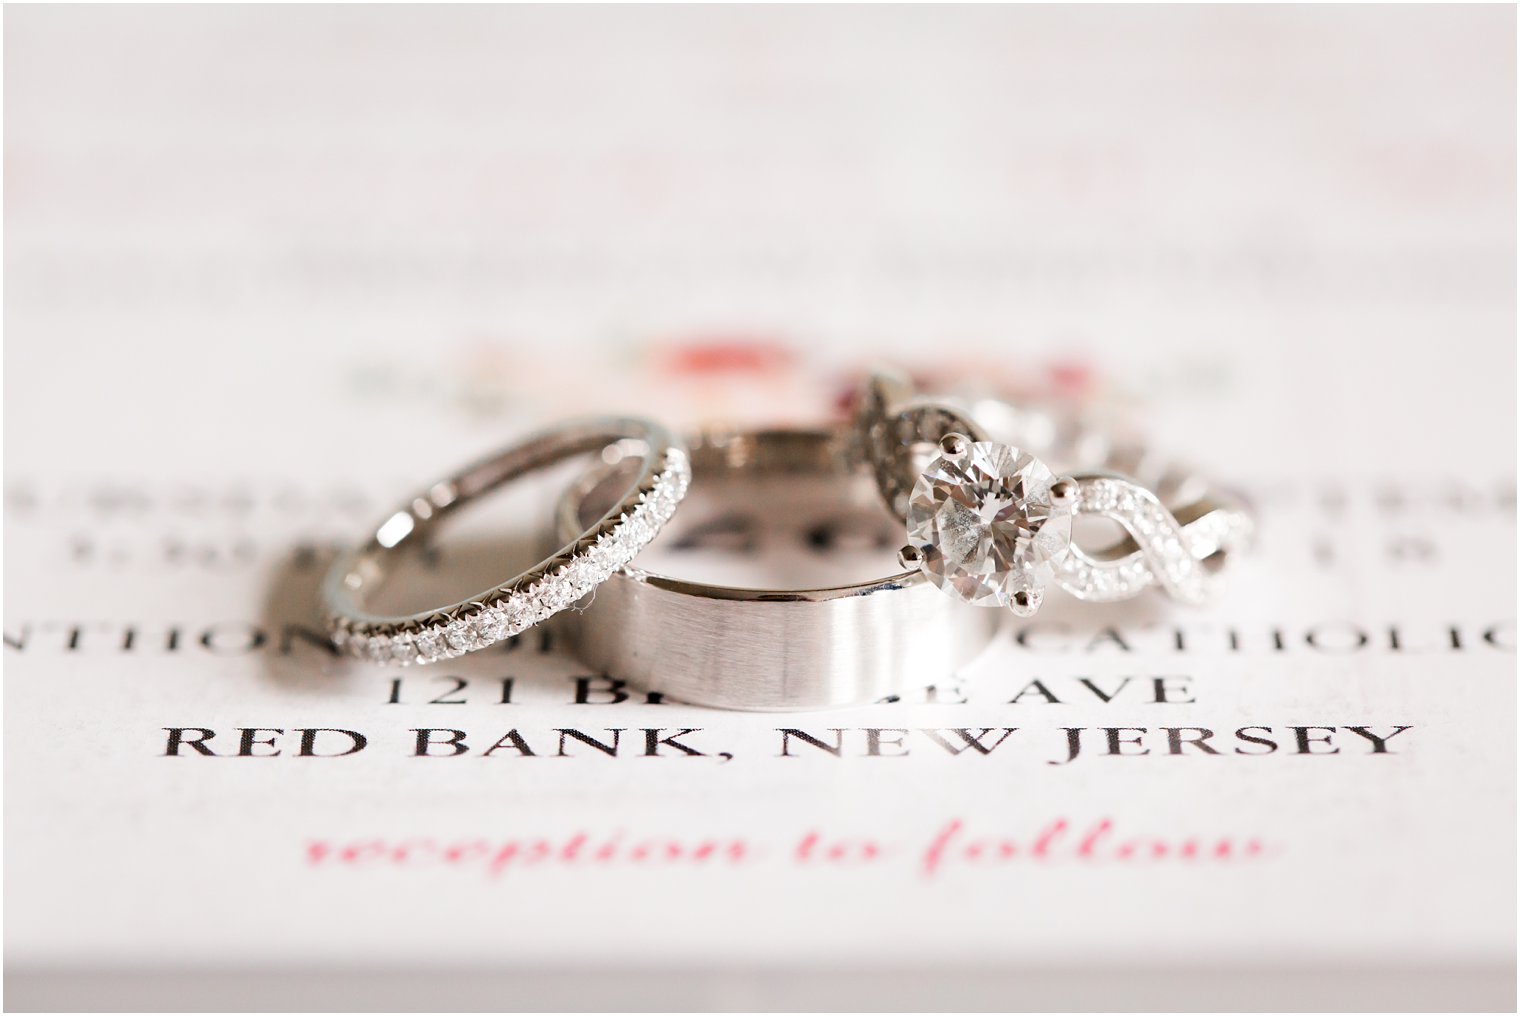 wedding rings on wedding invitation by Zazzle